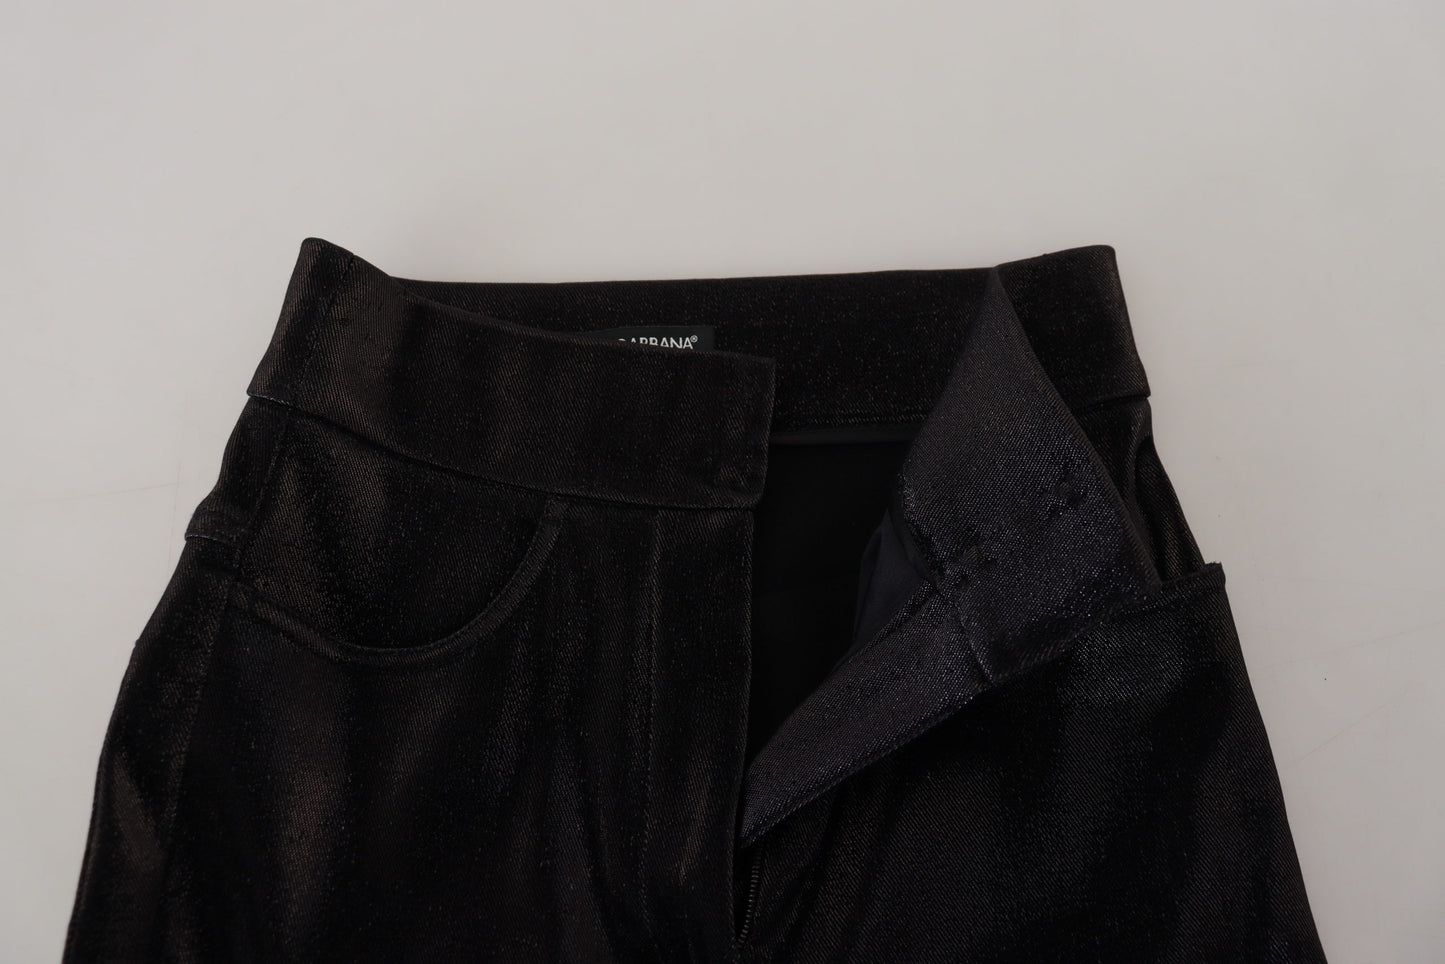 Elegant Black Denim Pants - Tailored Fit